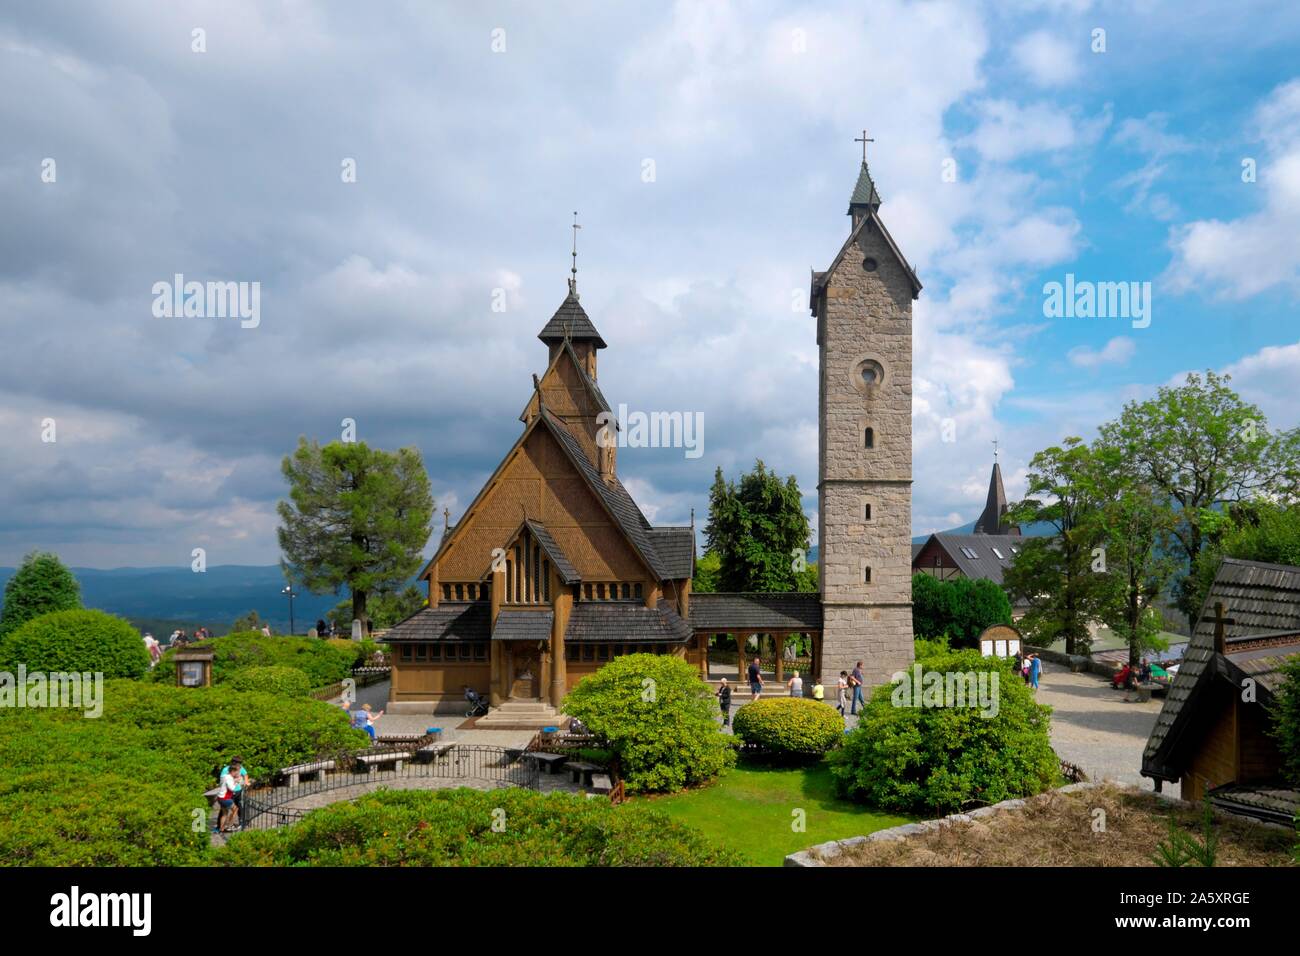 Romanische Stabkirche Wang mit Glockenturm, Krummhubel, Karpacz, Riesengebirge, Polen Stockfoto